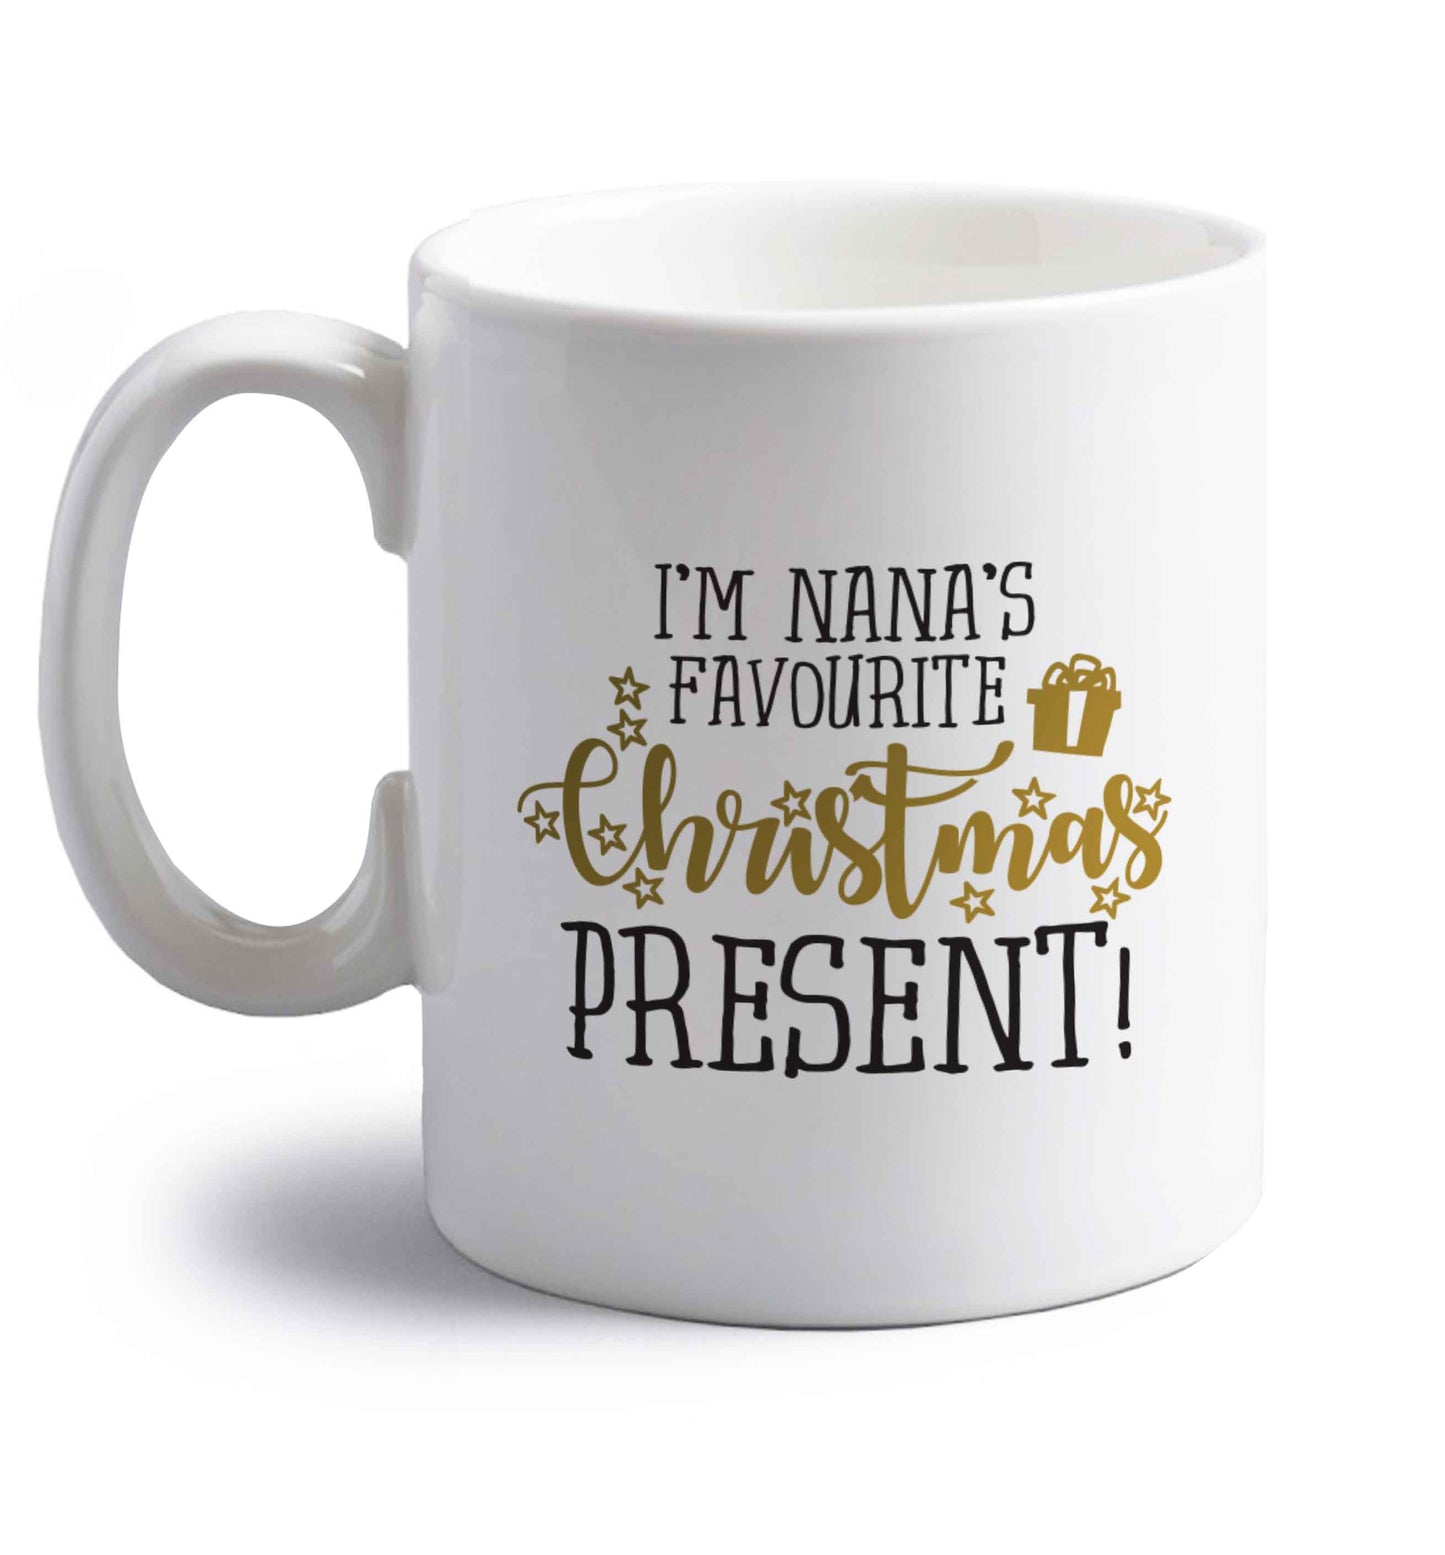 Nana's favourite Christmas present right handed white ceramic mug 